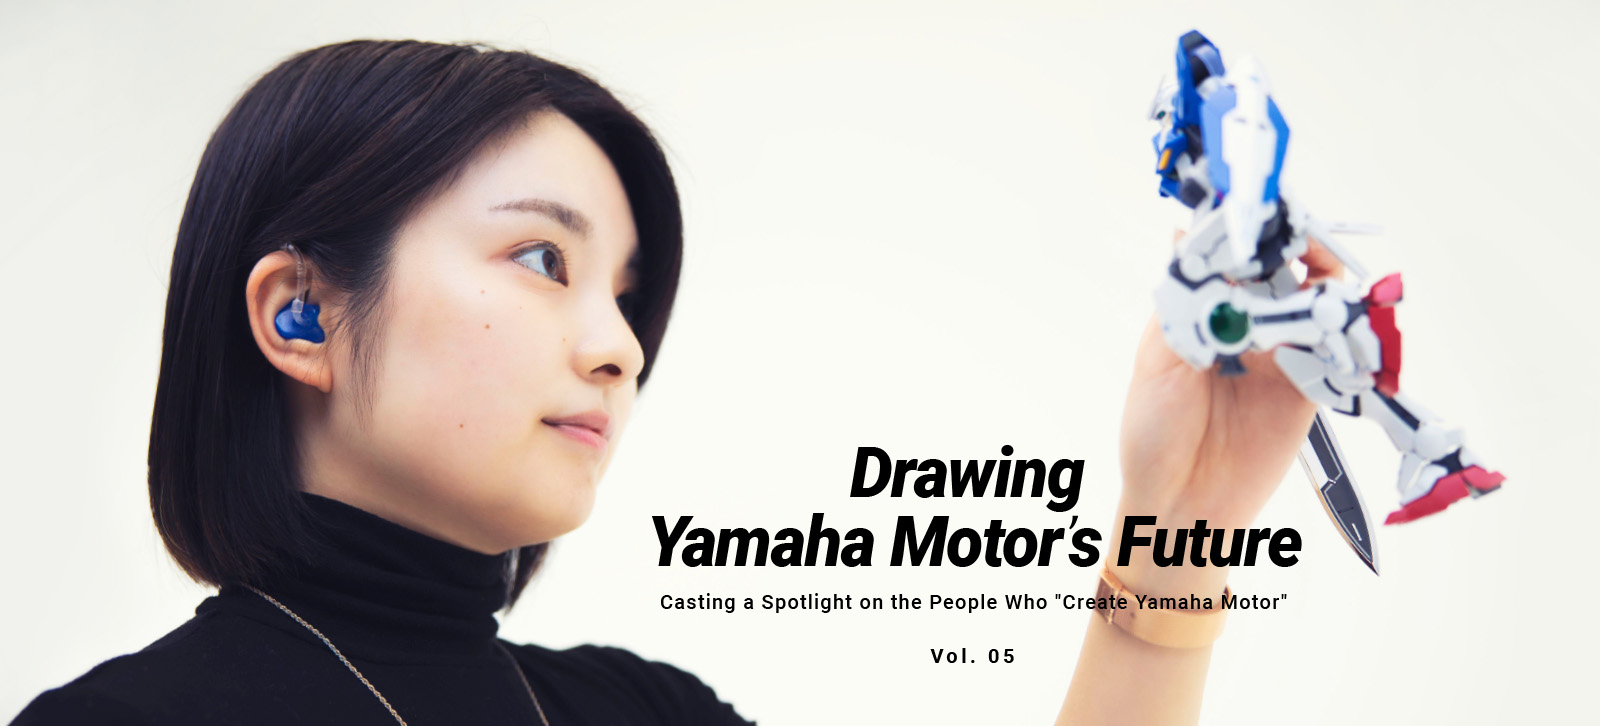 Drawing Yamaha’s Future -Casting a Spotlight on the People Who “Create Yamaha”- Vol. 05